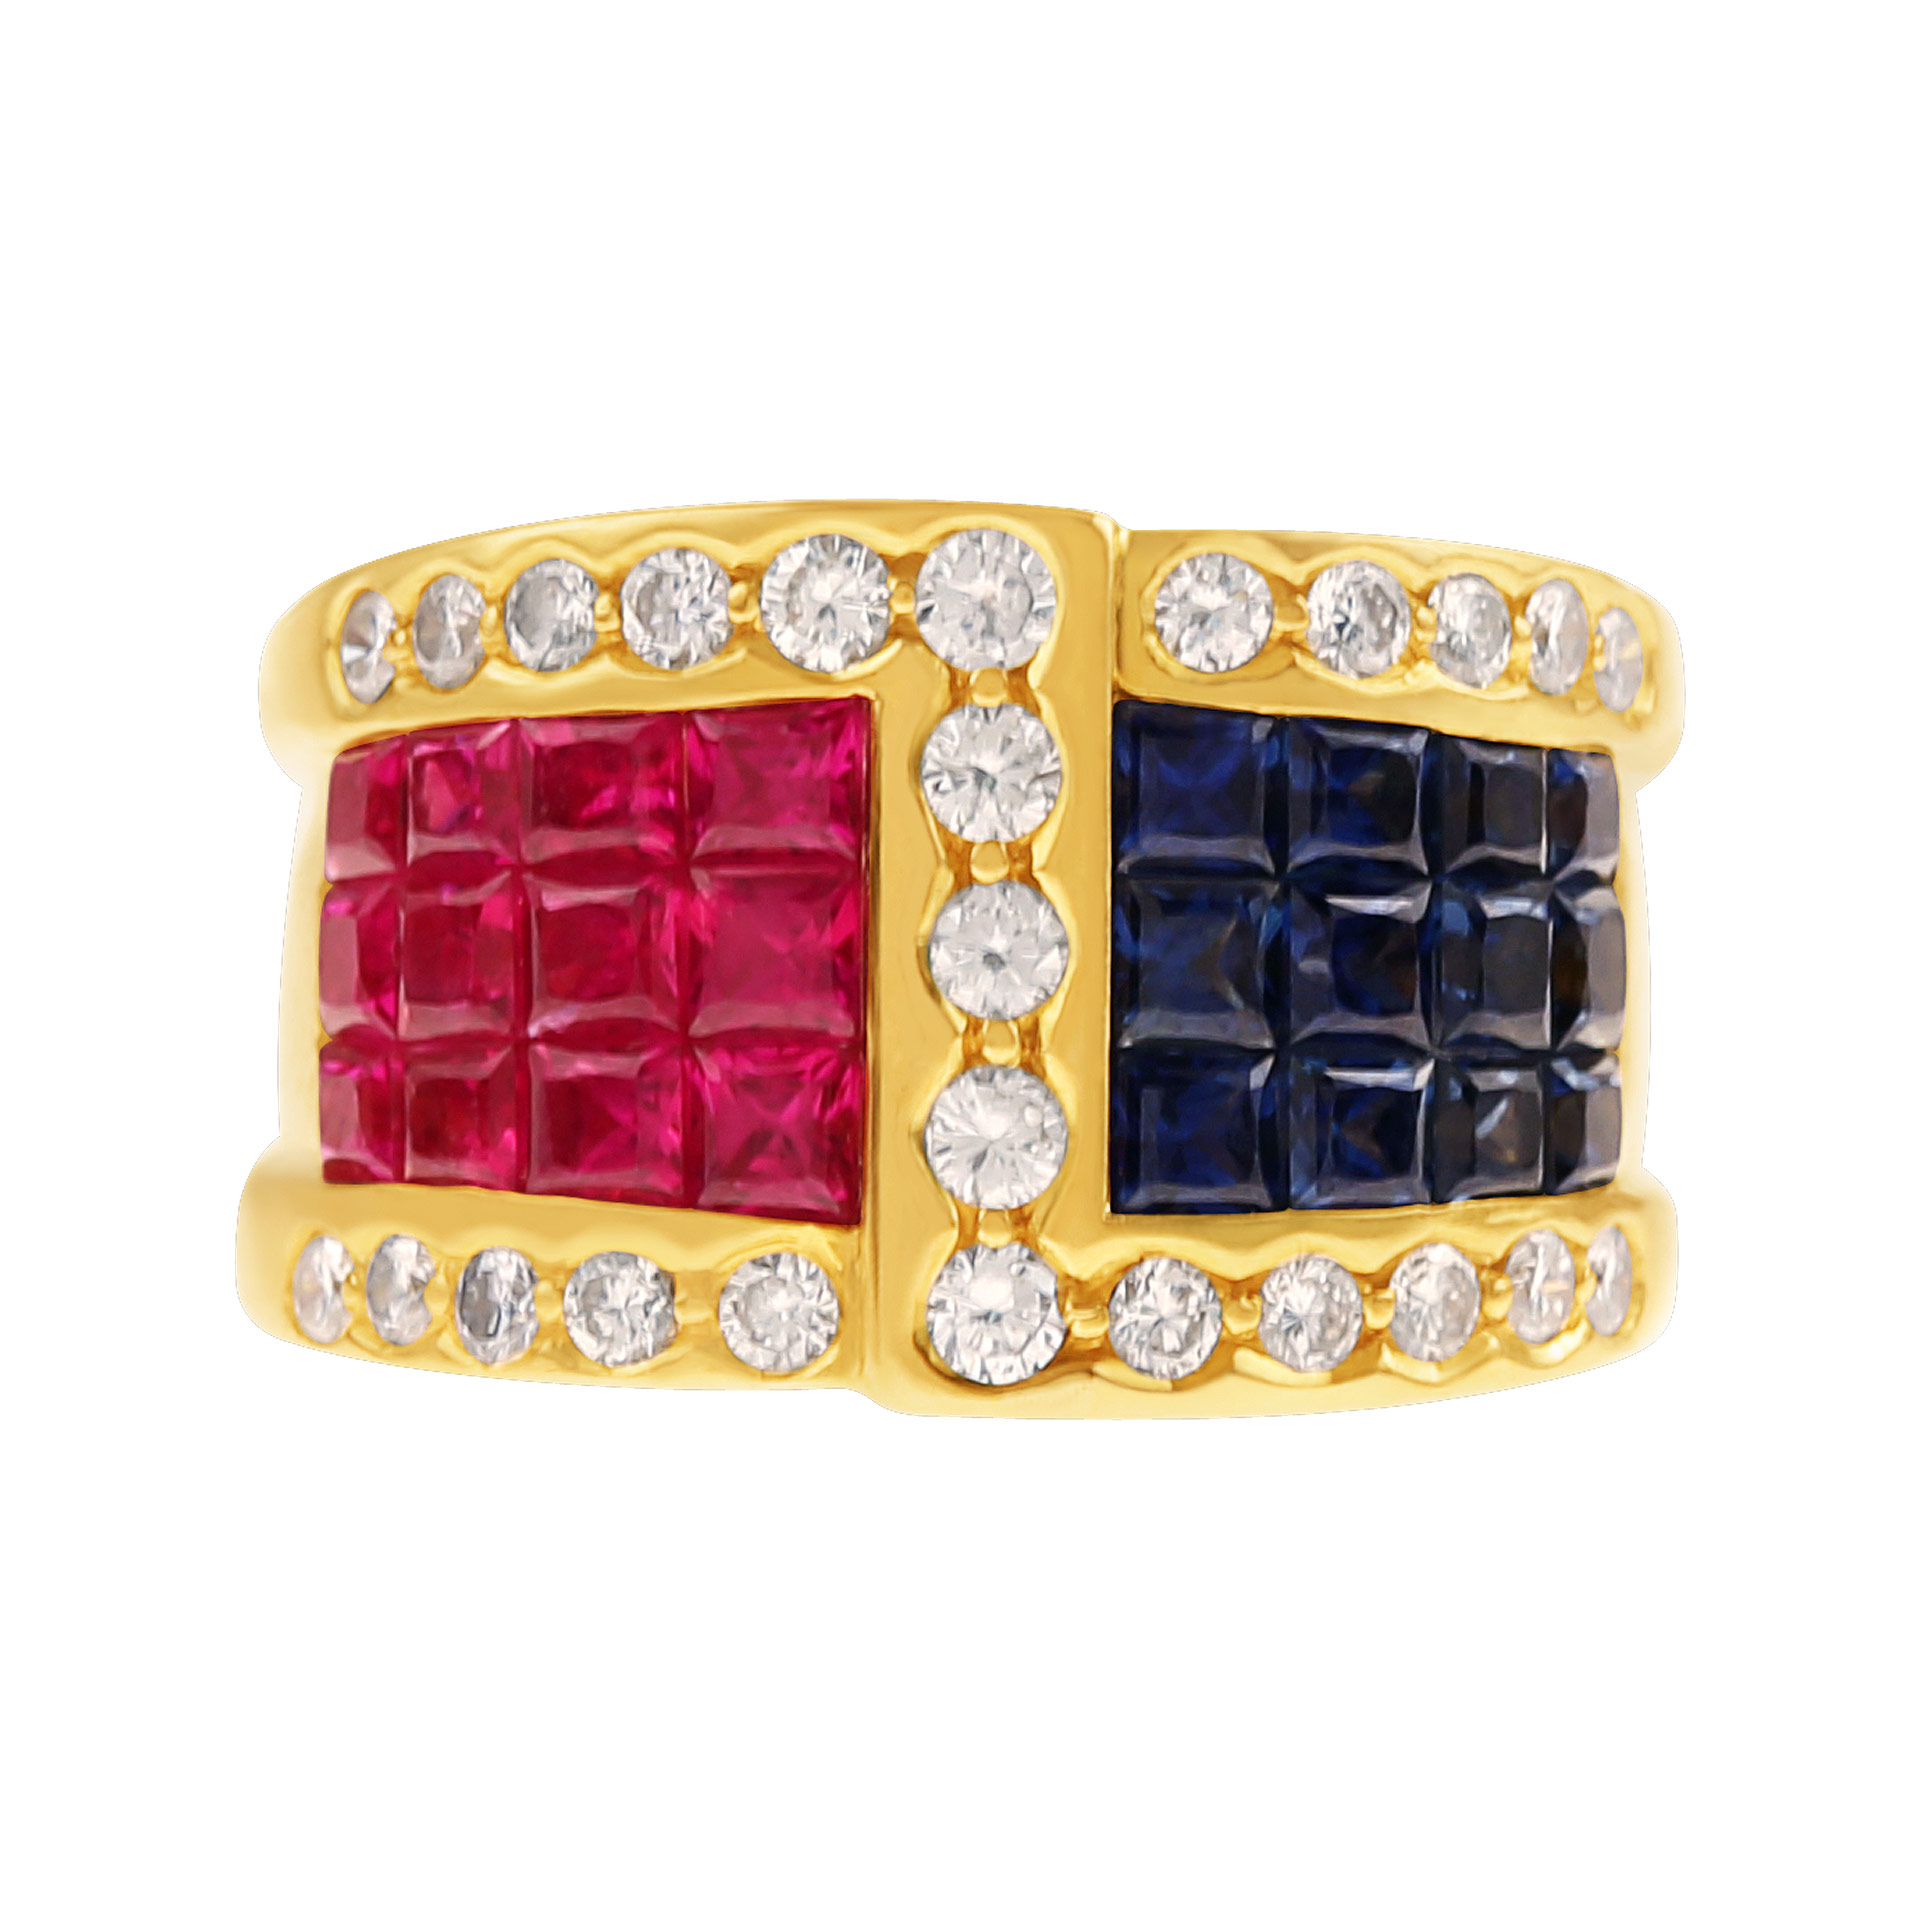 Sapphire, ruby & diamond ring in 18k yellow gold.